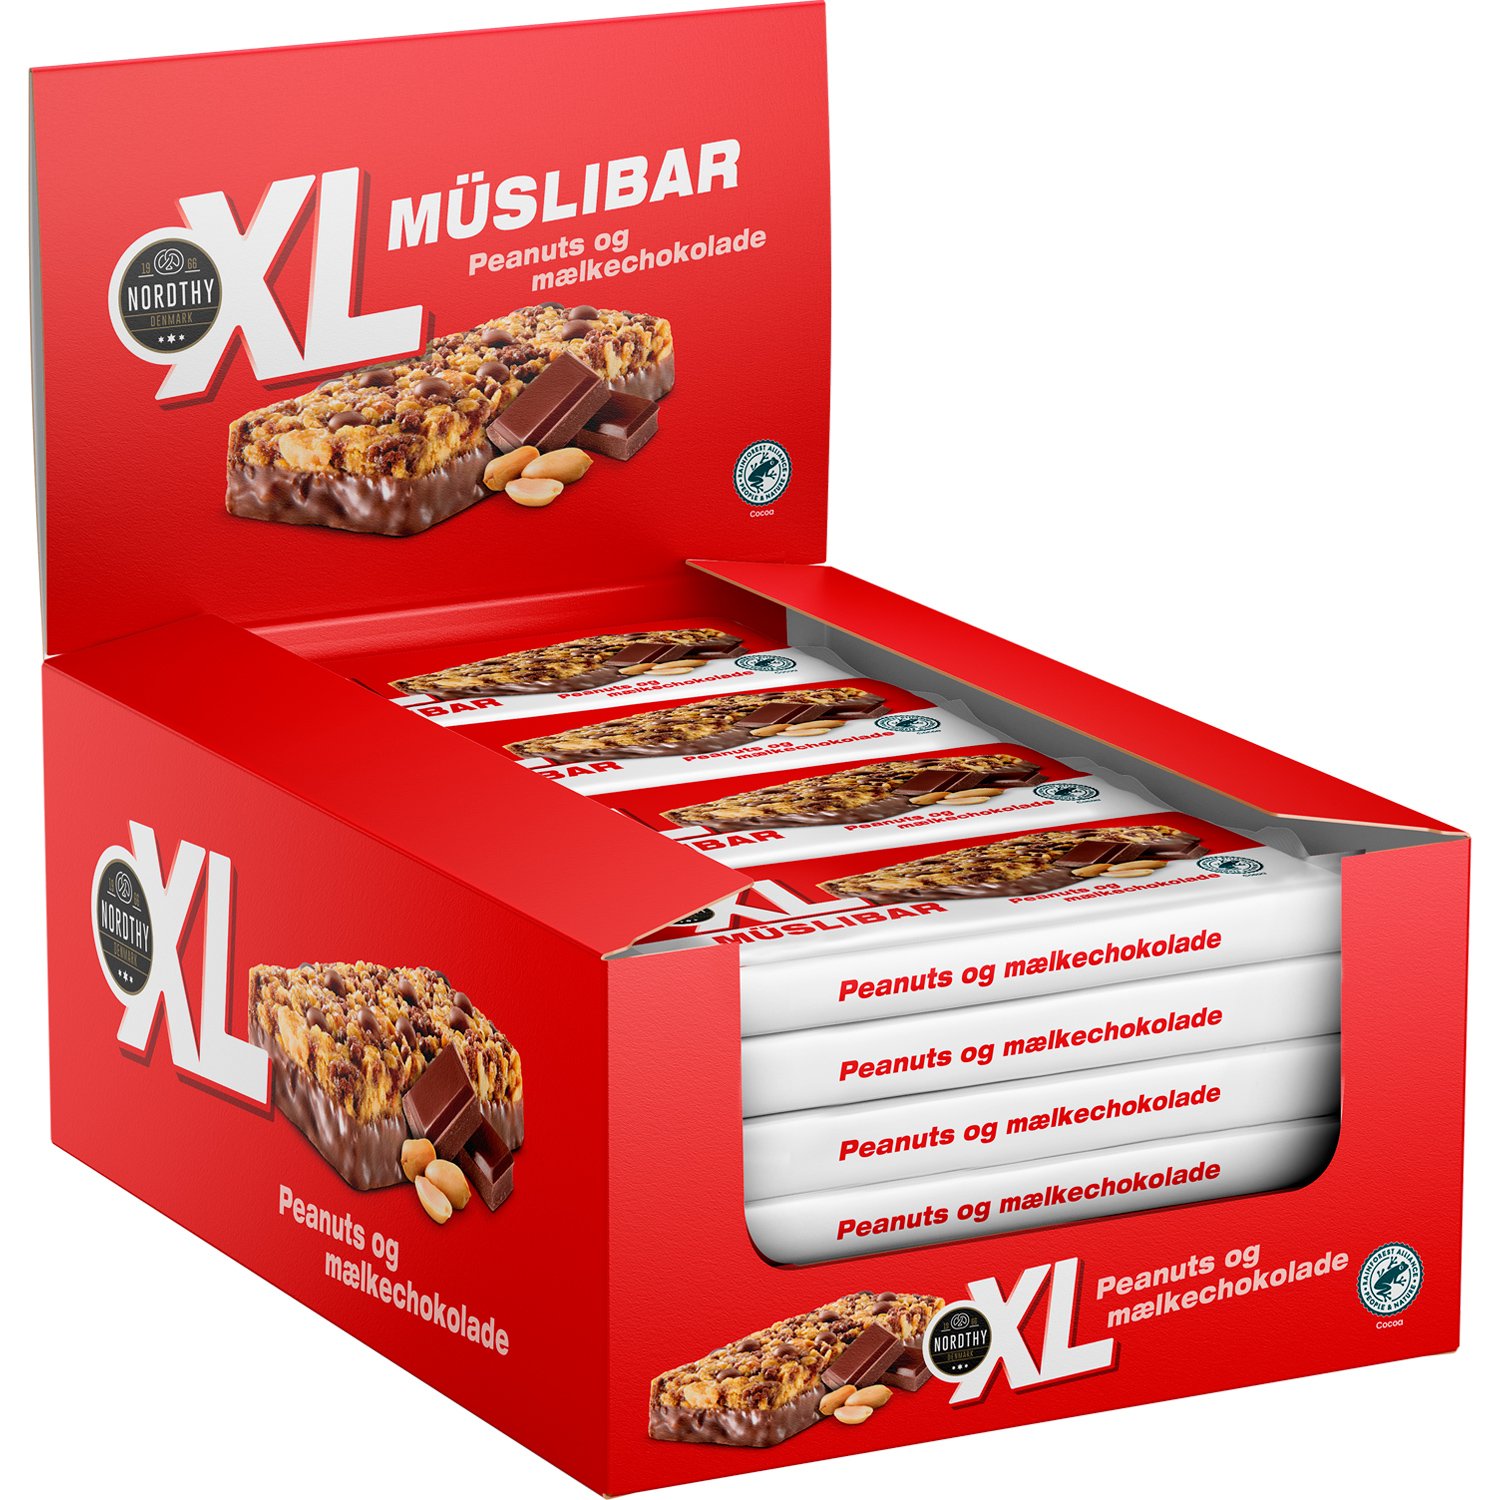 Nordthy XL müslibars peanuts & mælkechokolade 24 stk